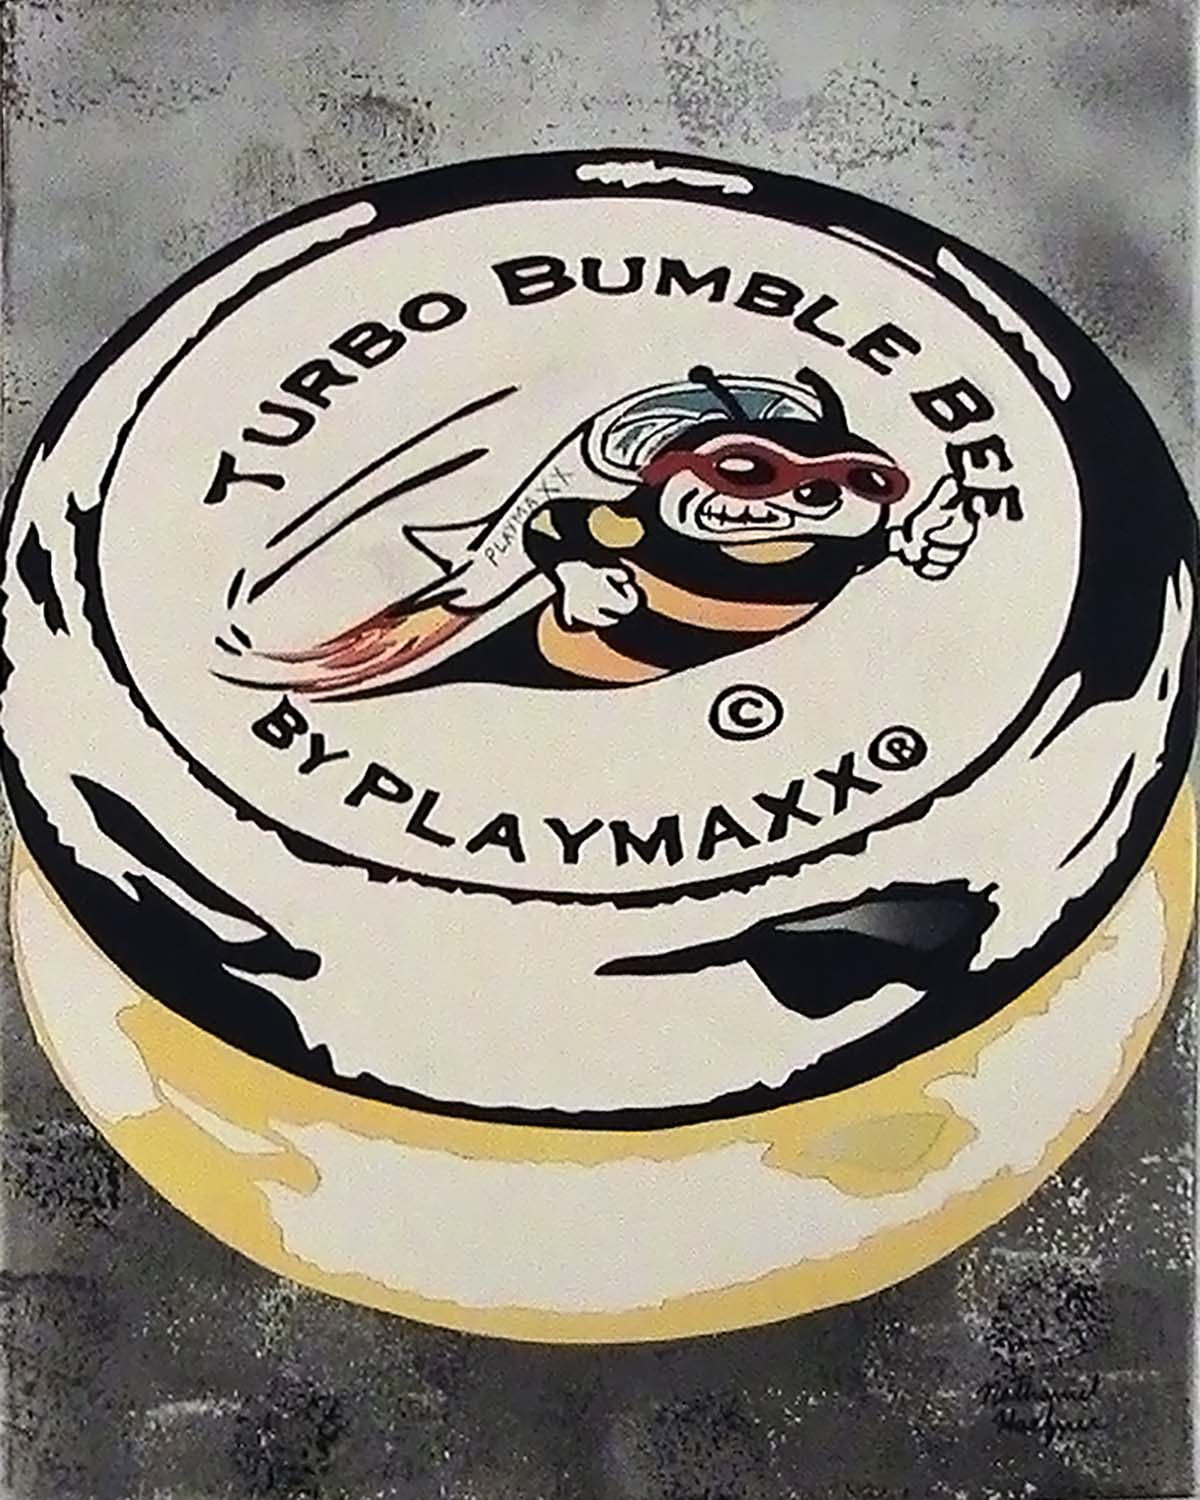 Playmaxx Turbo Bumble Bee